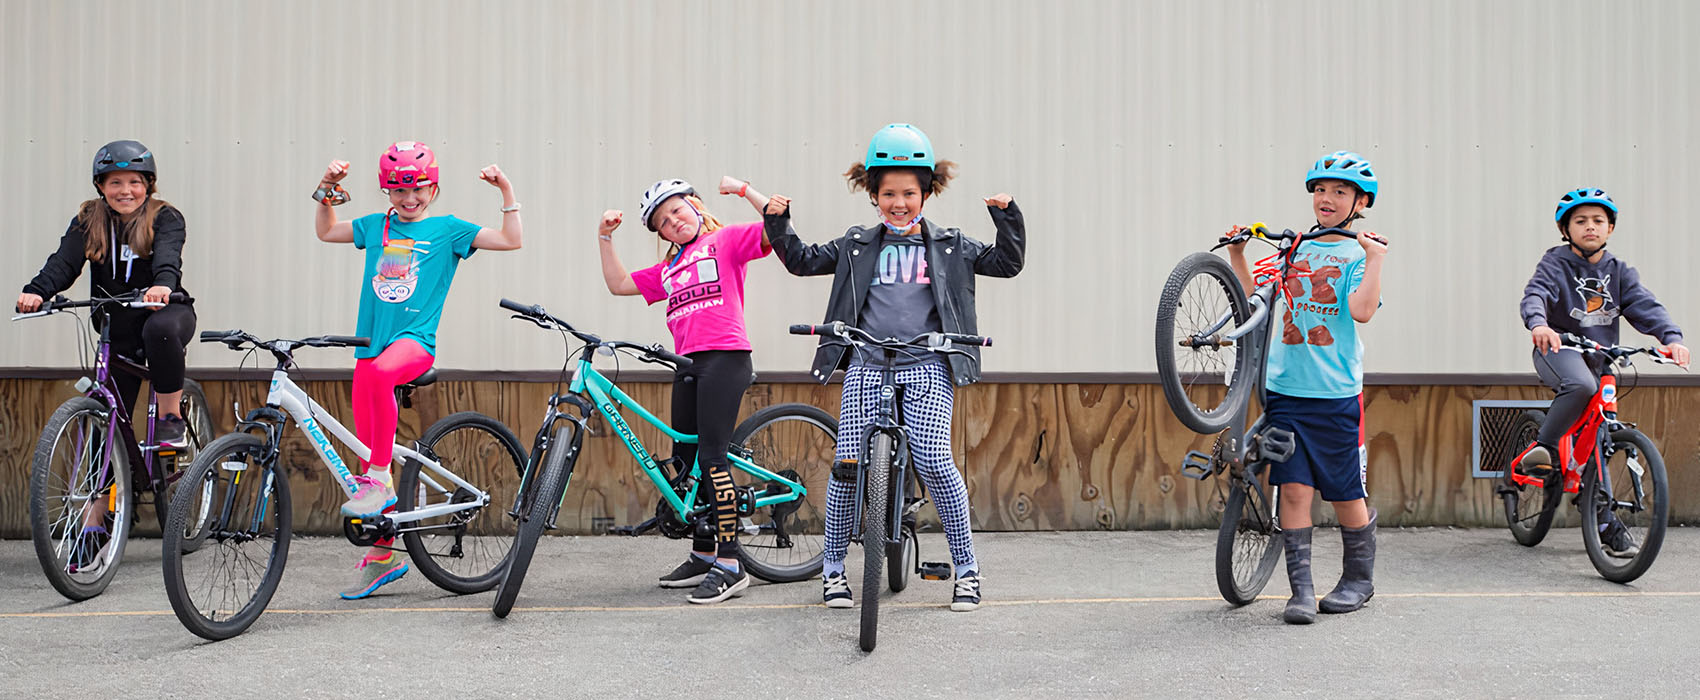 HUB Cycling group of kids riding bikes